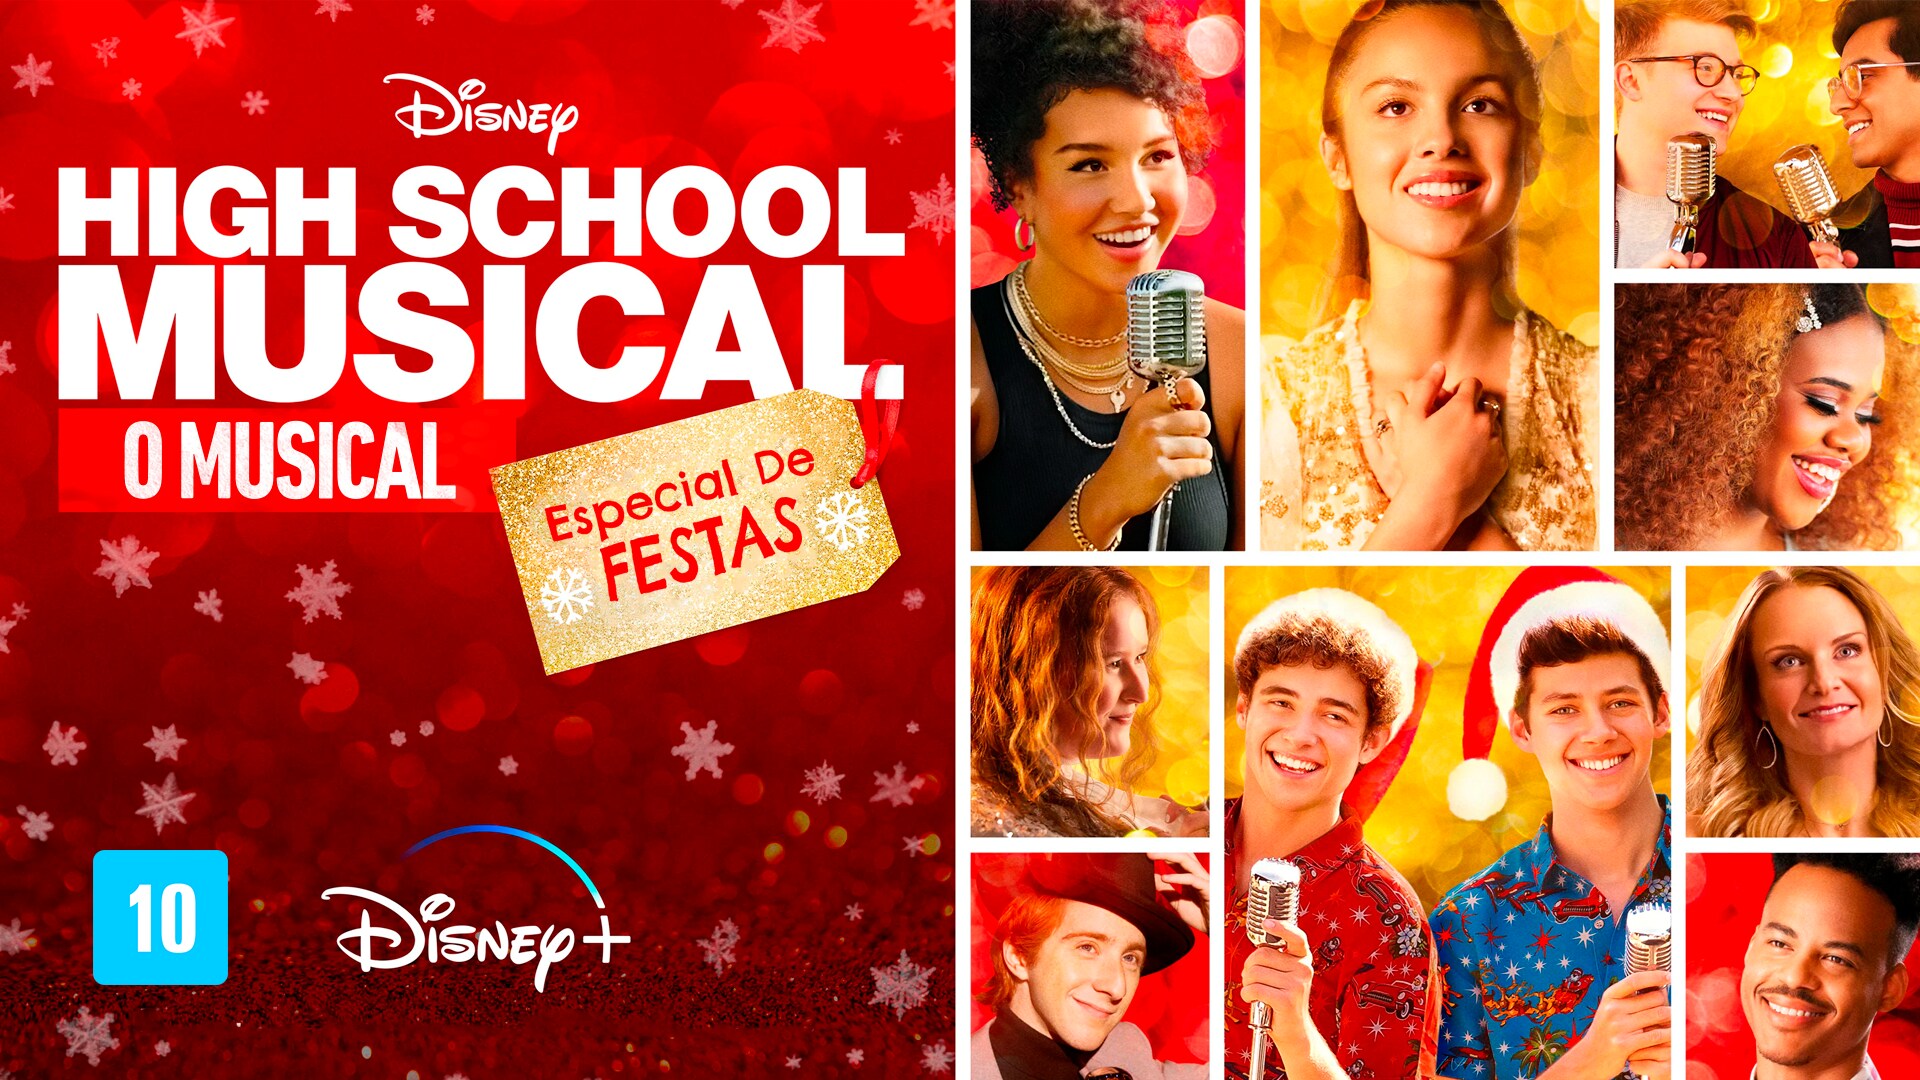 High School Musical: A Série: O Musical